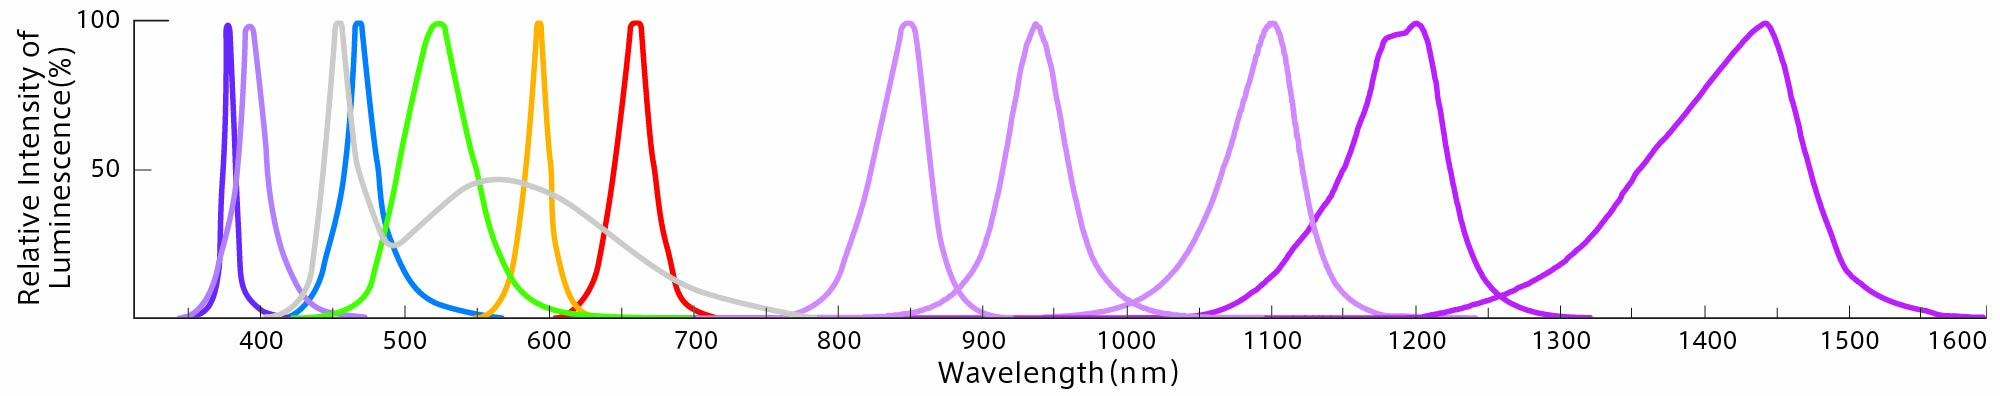 Relative issue intensity per peak wavelength